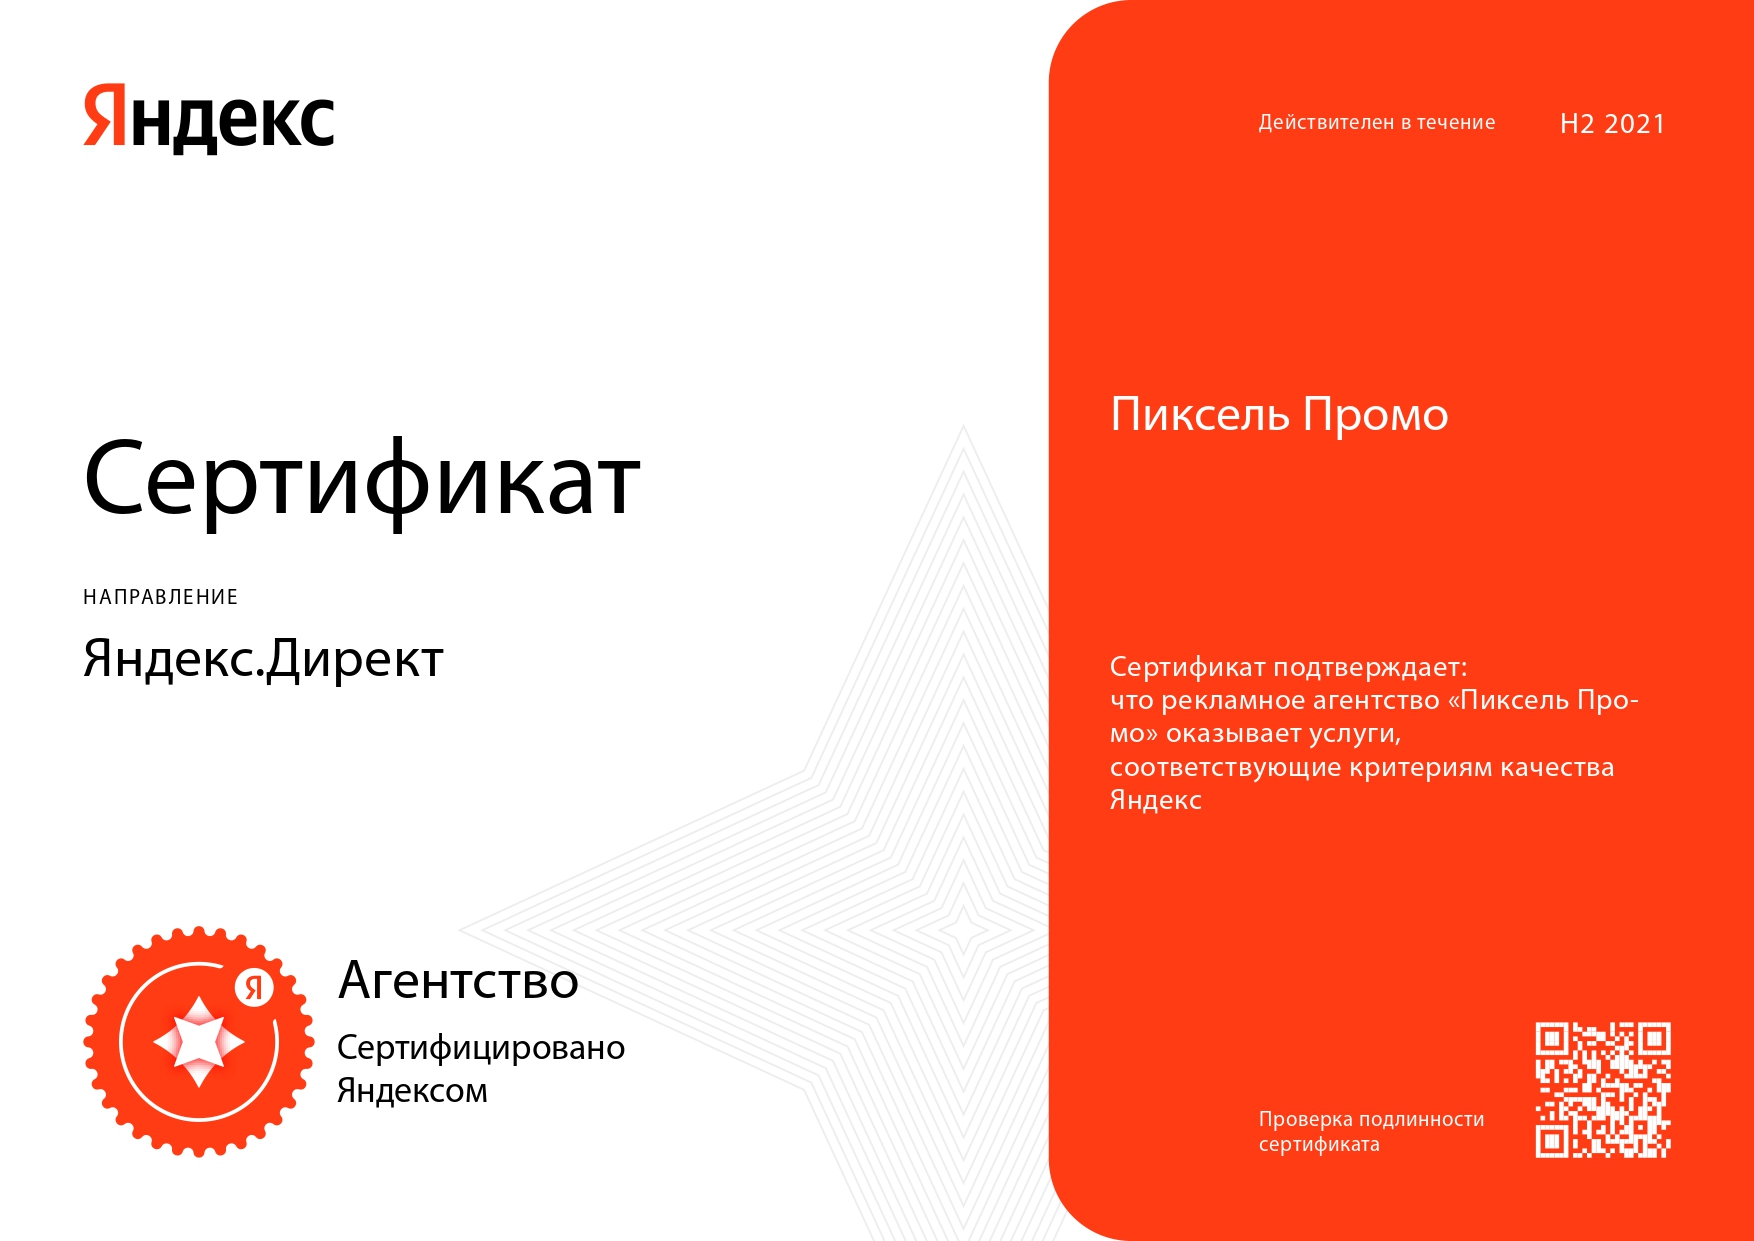 Сертифицированное агентство Яндекс.Директ